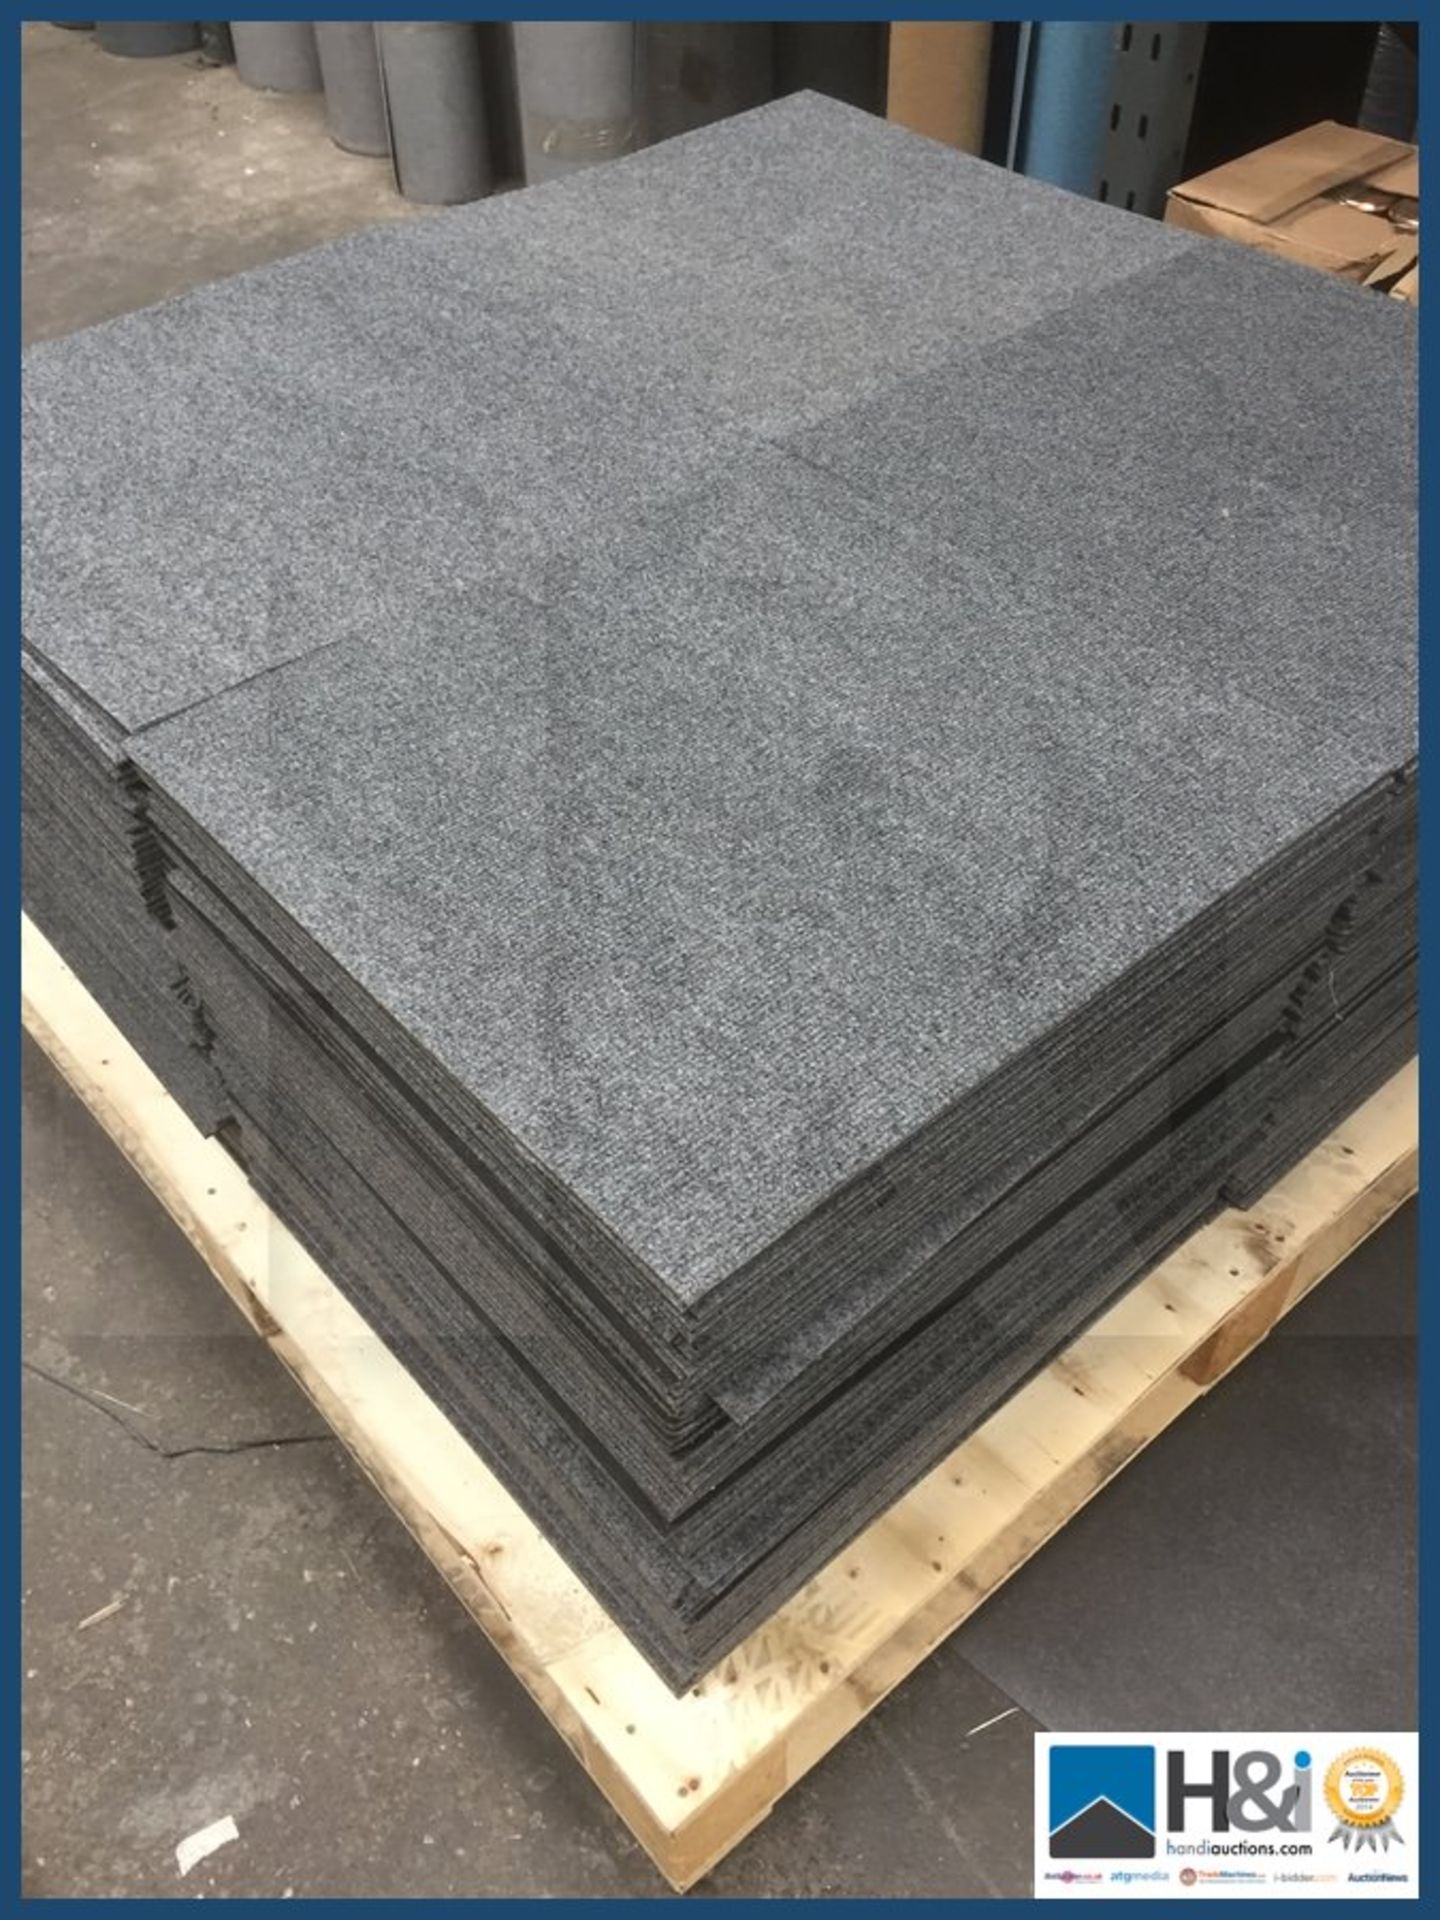 Burmatex contract carpet tiles. Design:Cordiale. Colour:Canadian Diamond. 80 tiles total 20m2 per lo